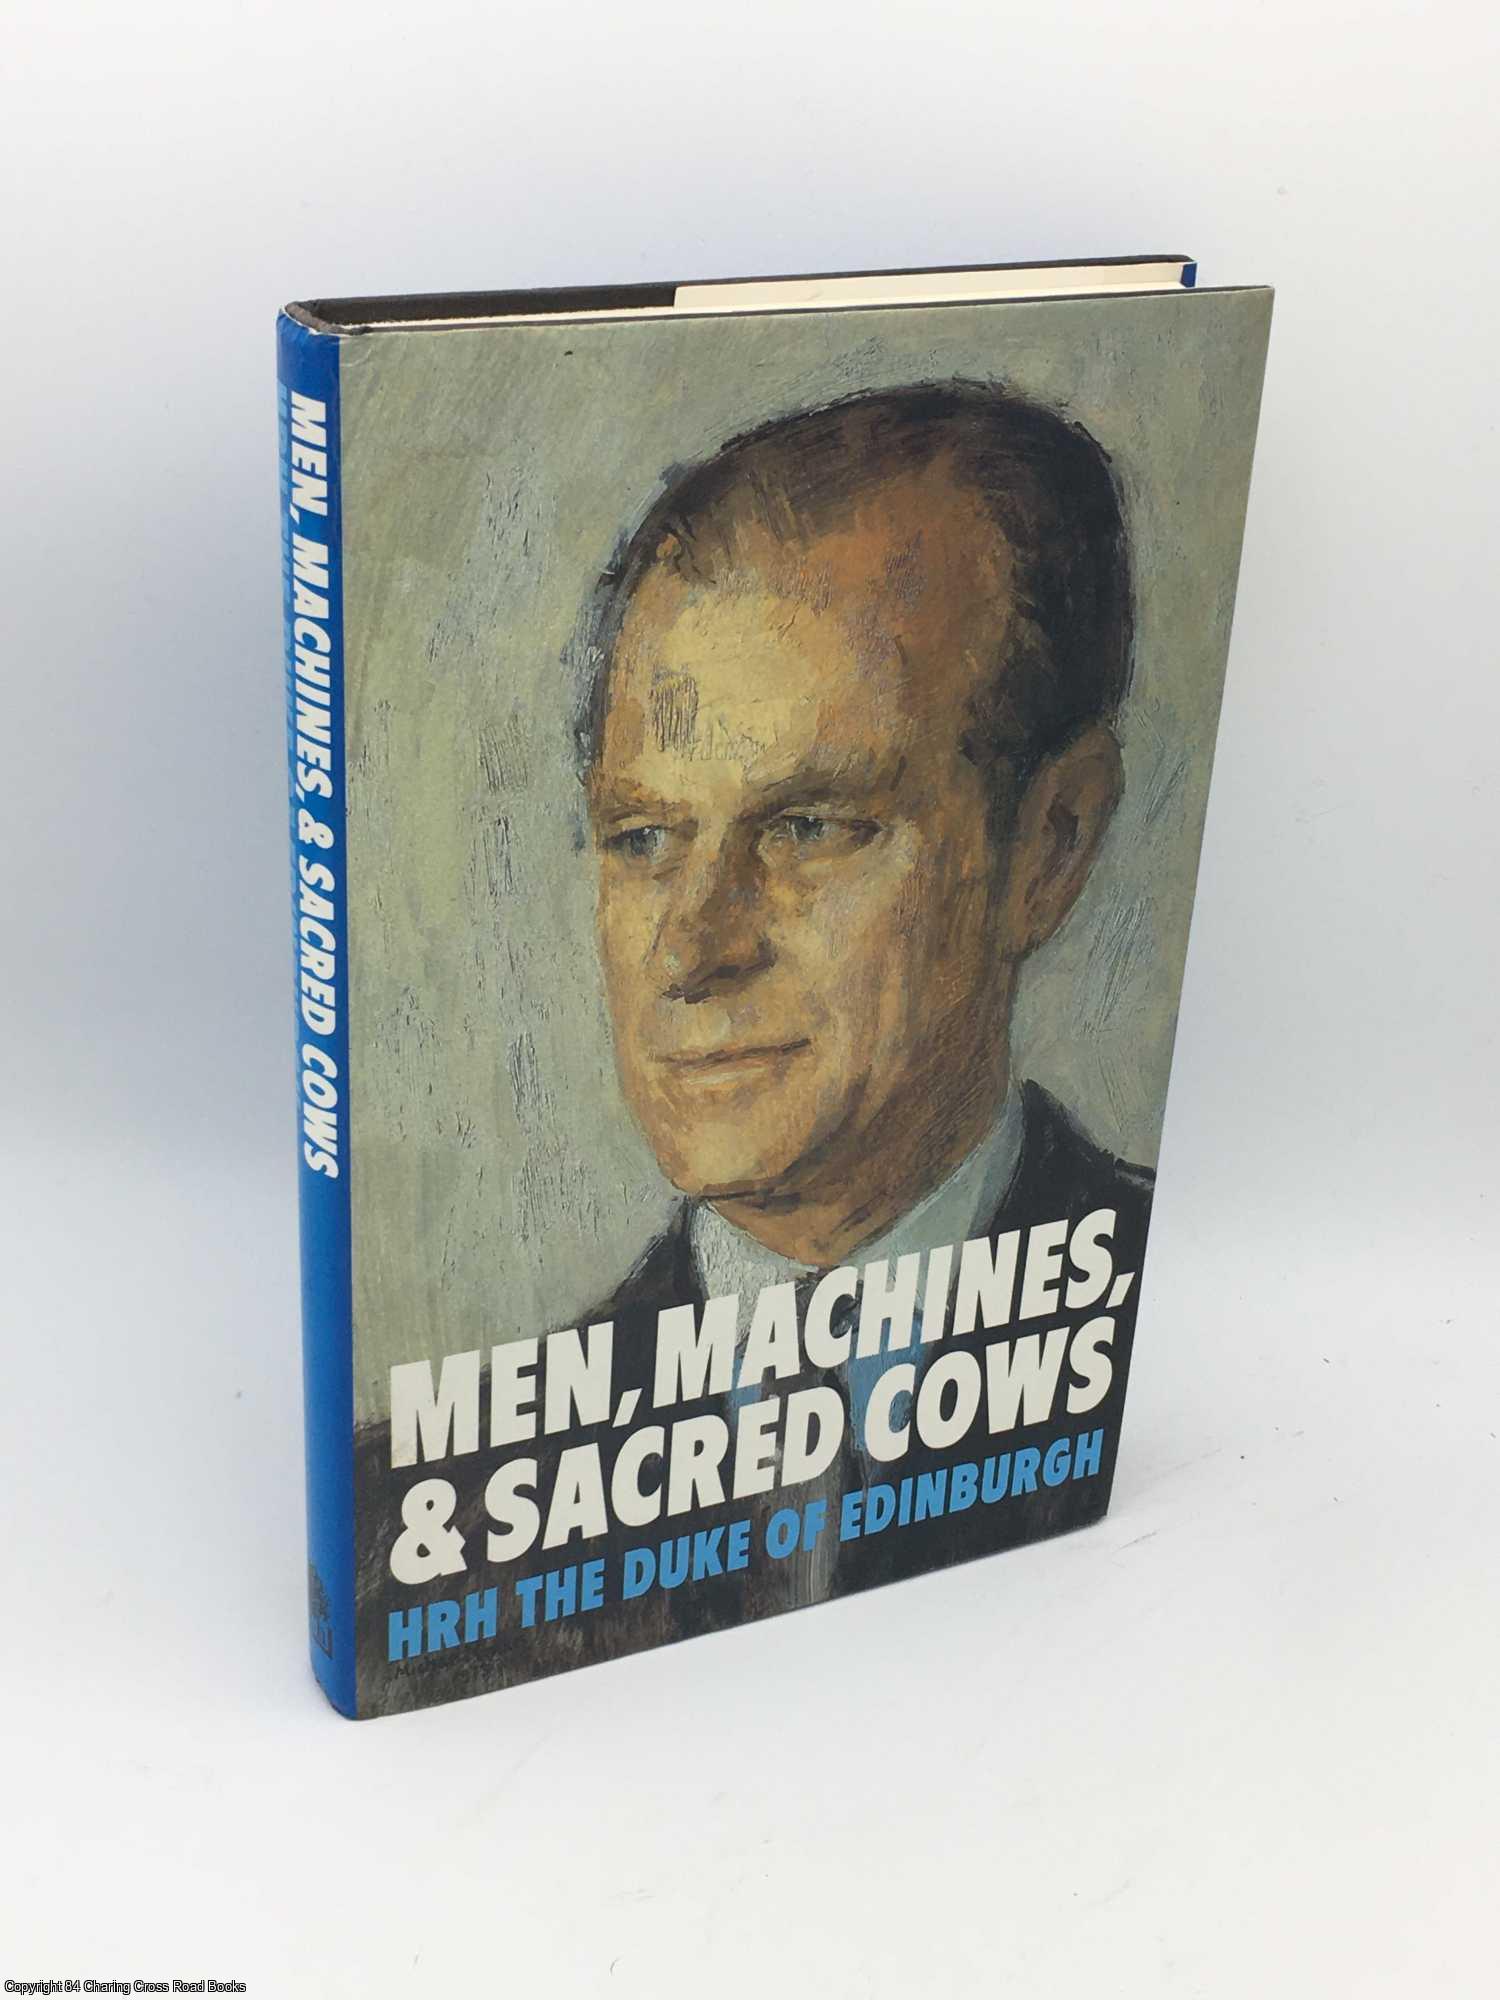 Philip, Prince, the Duke of Edinburgh - Men, Machines and Sacred Cows